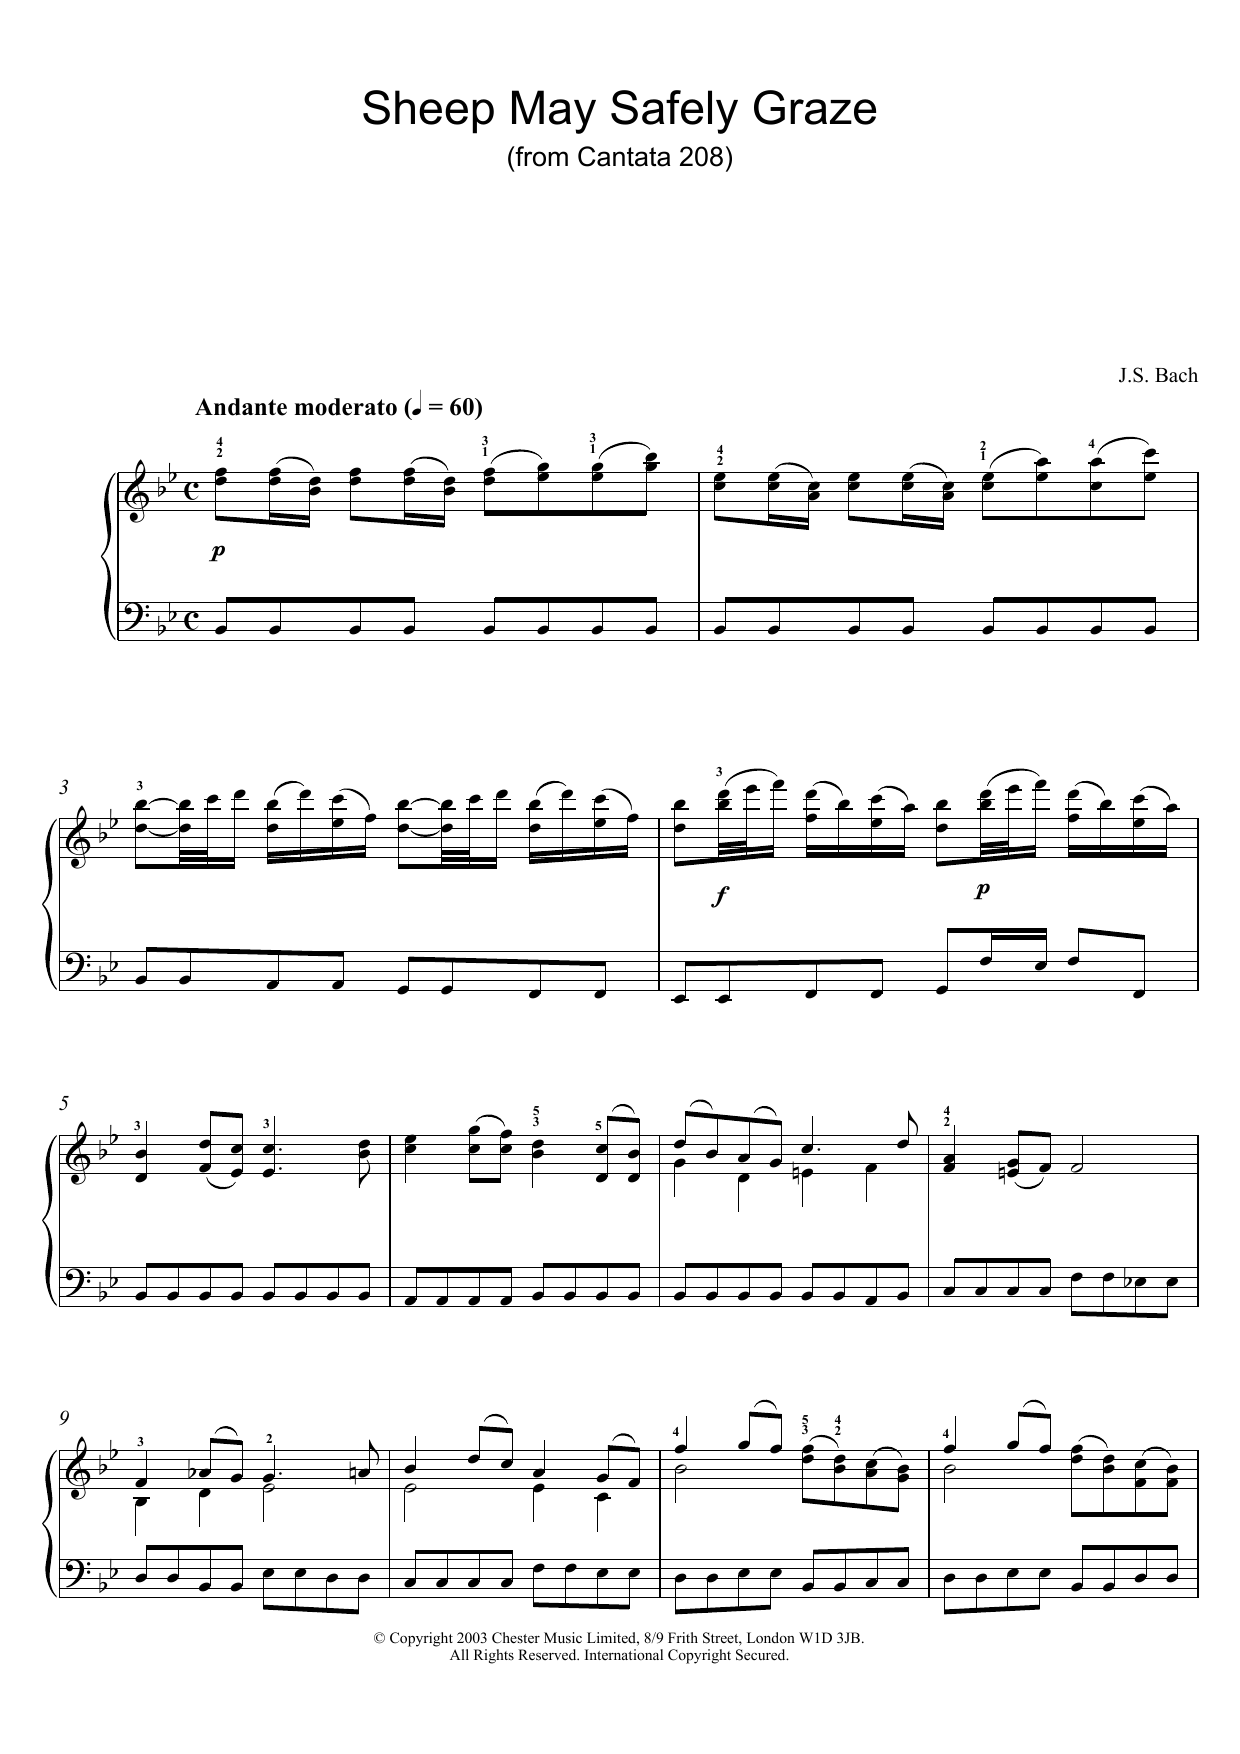 Johann Sebastian Bach Sheep May Safely Graze (from Cantata 208) Sheet Music Notes & Chords for Piano - Download or Print PDF